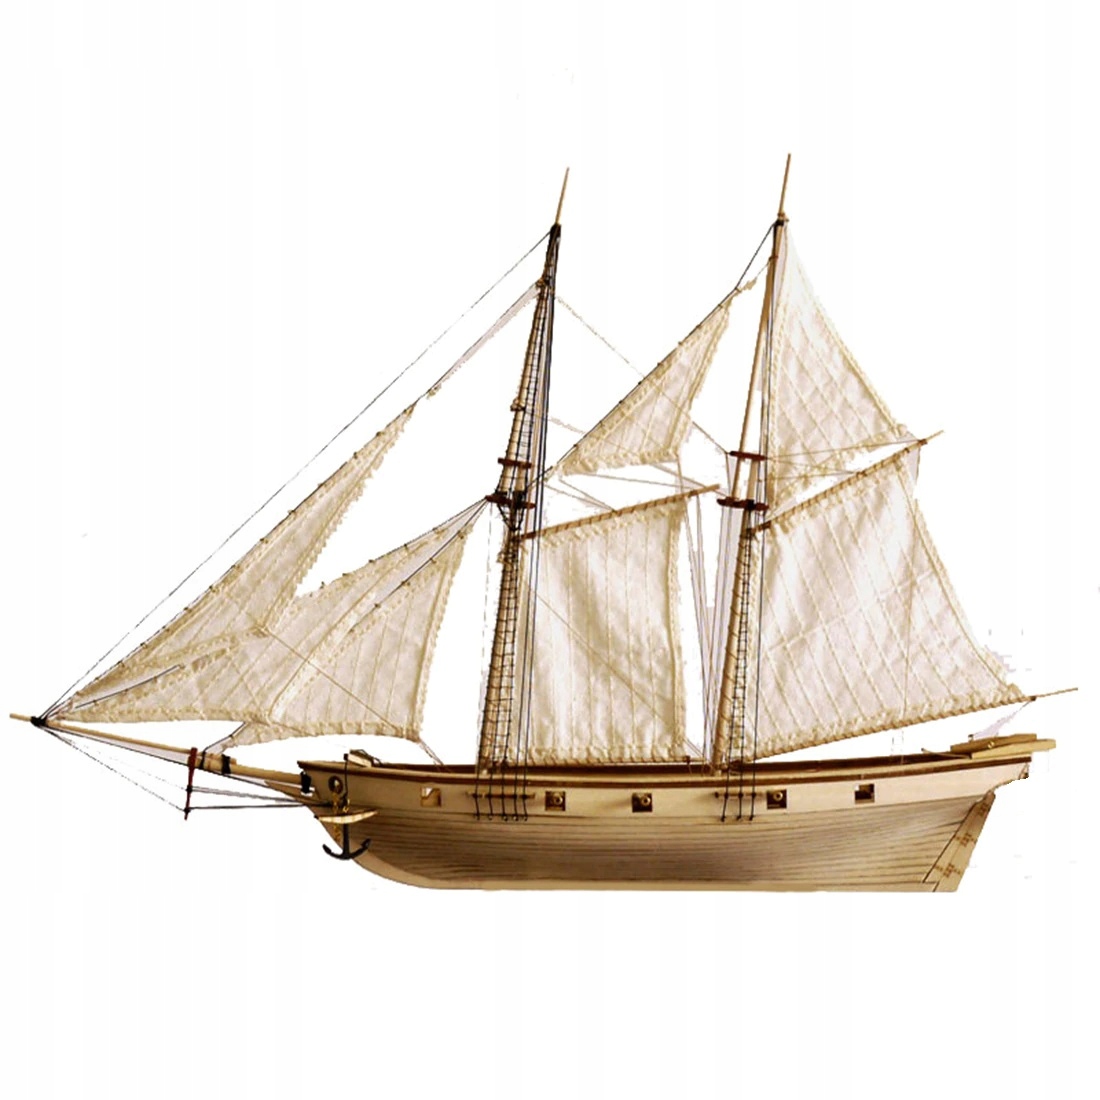 Drewniany Statek Do Sklejania Model Statku 1 100 9676037248 Allegro Pl